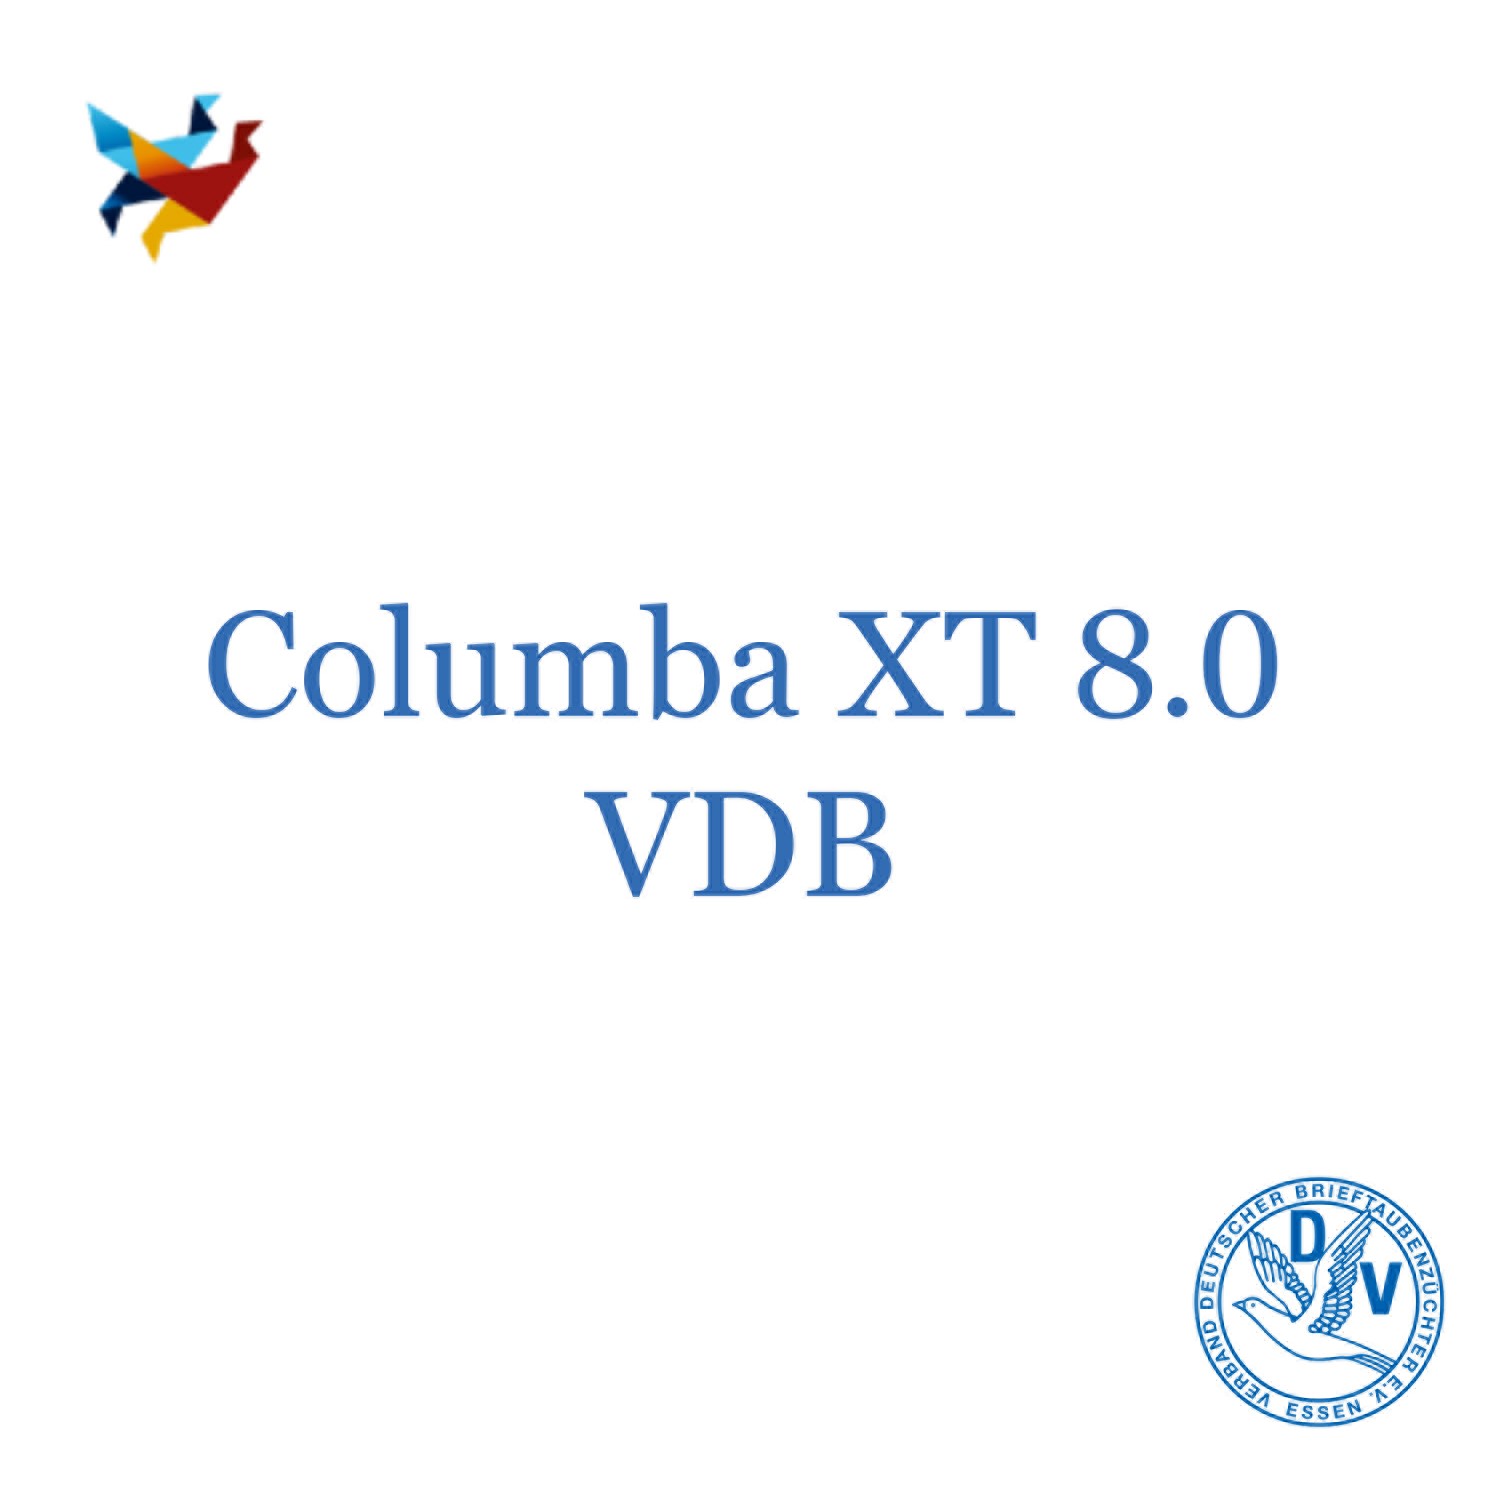 Columba XT 8.0 VDB